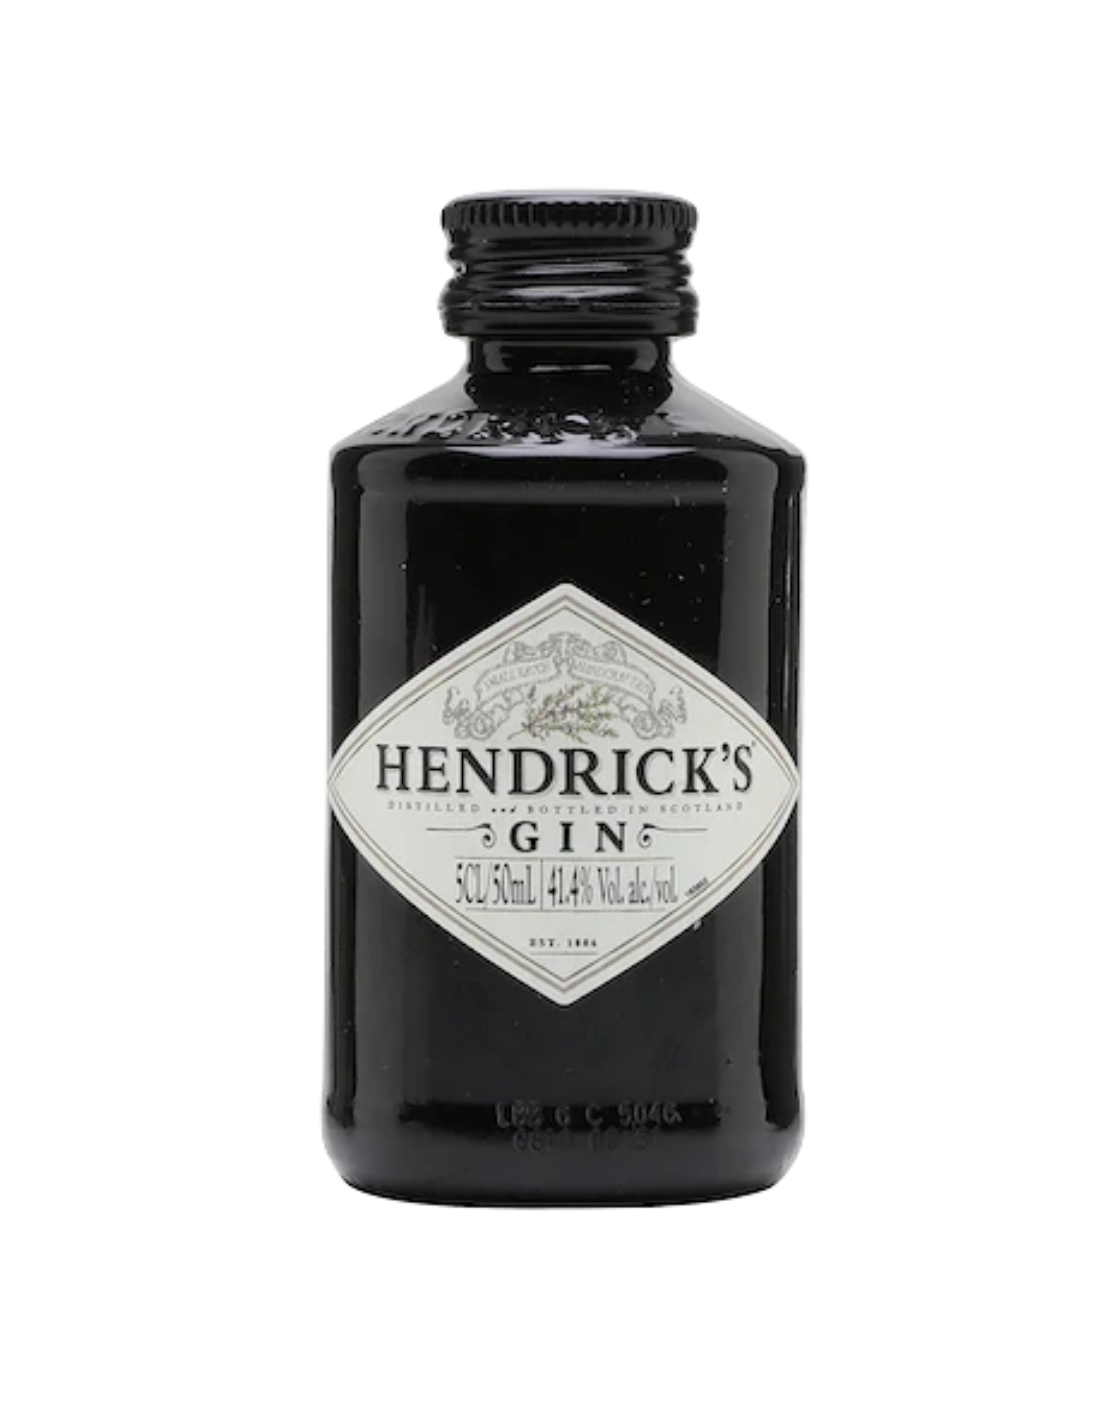 Gin Hendrick’s, 41.4% alc., 0.05L, Scotia alcooldiscount.ro